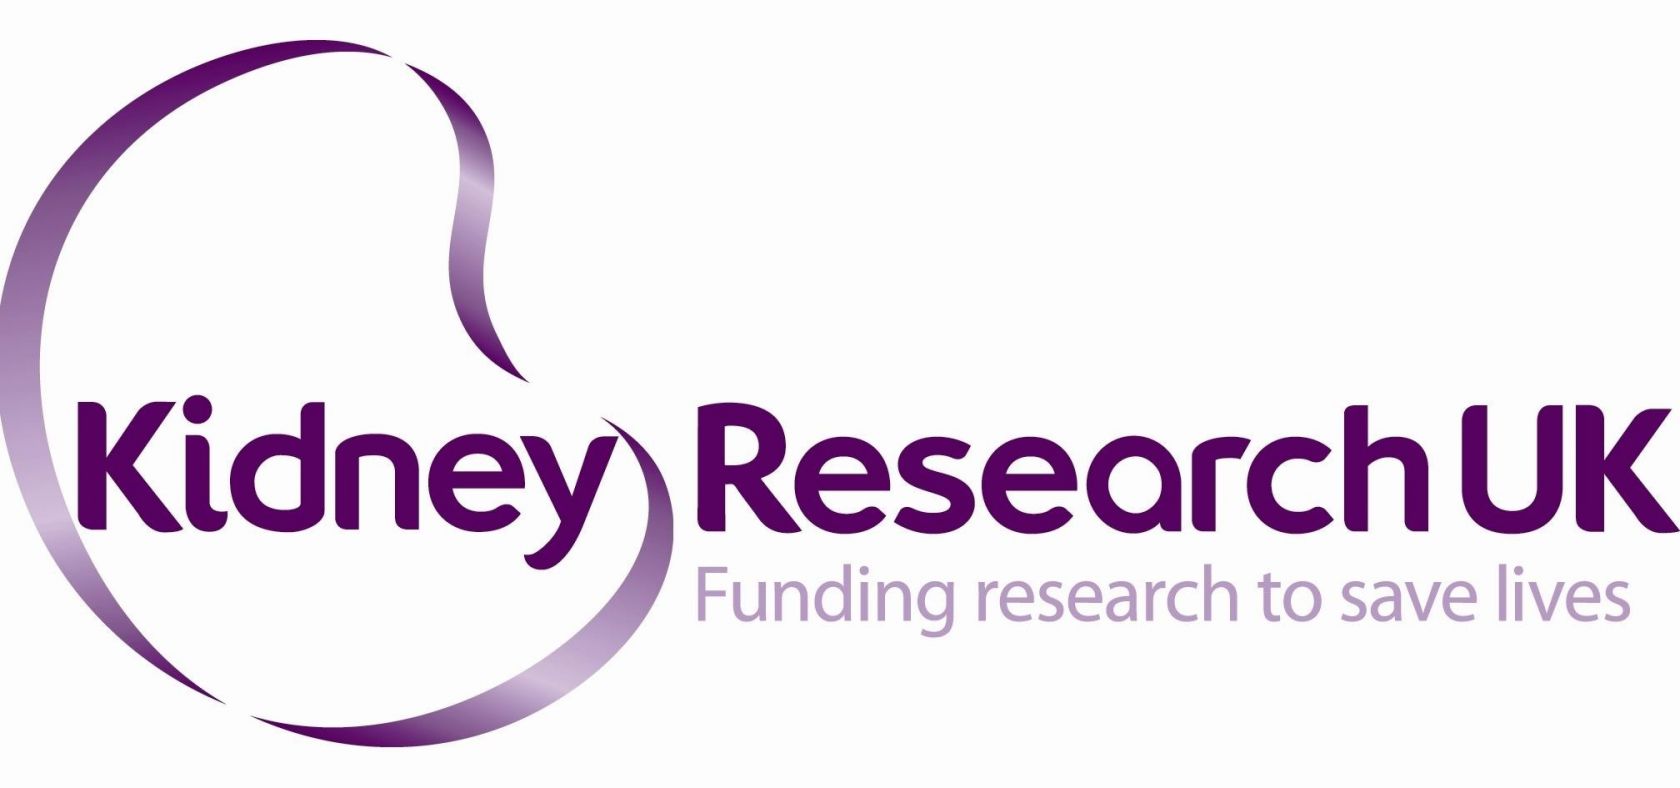 Kidney research UK